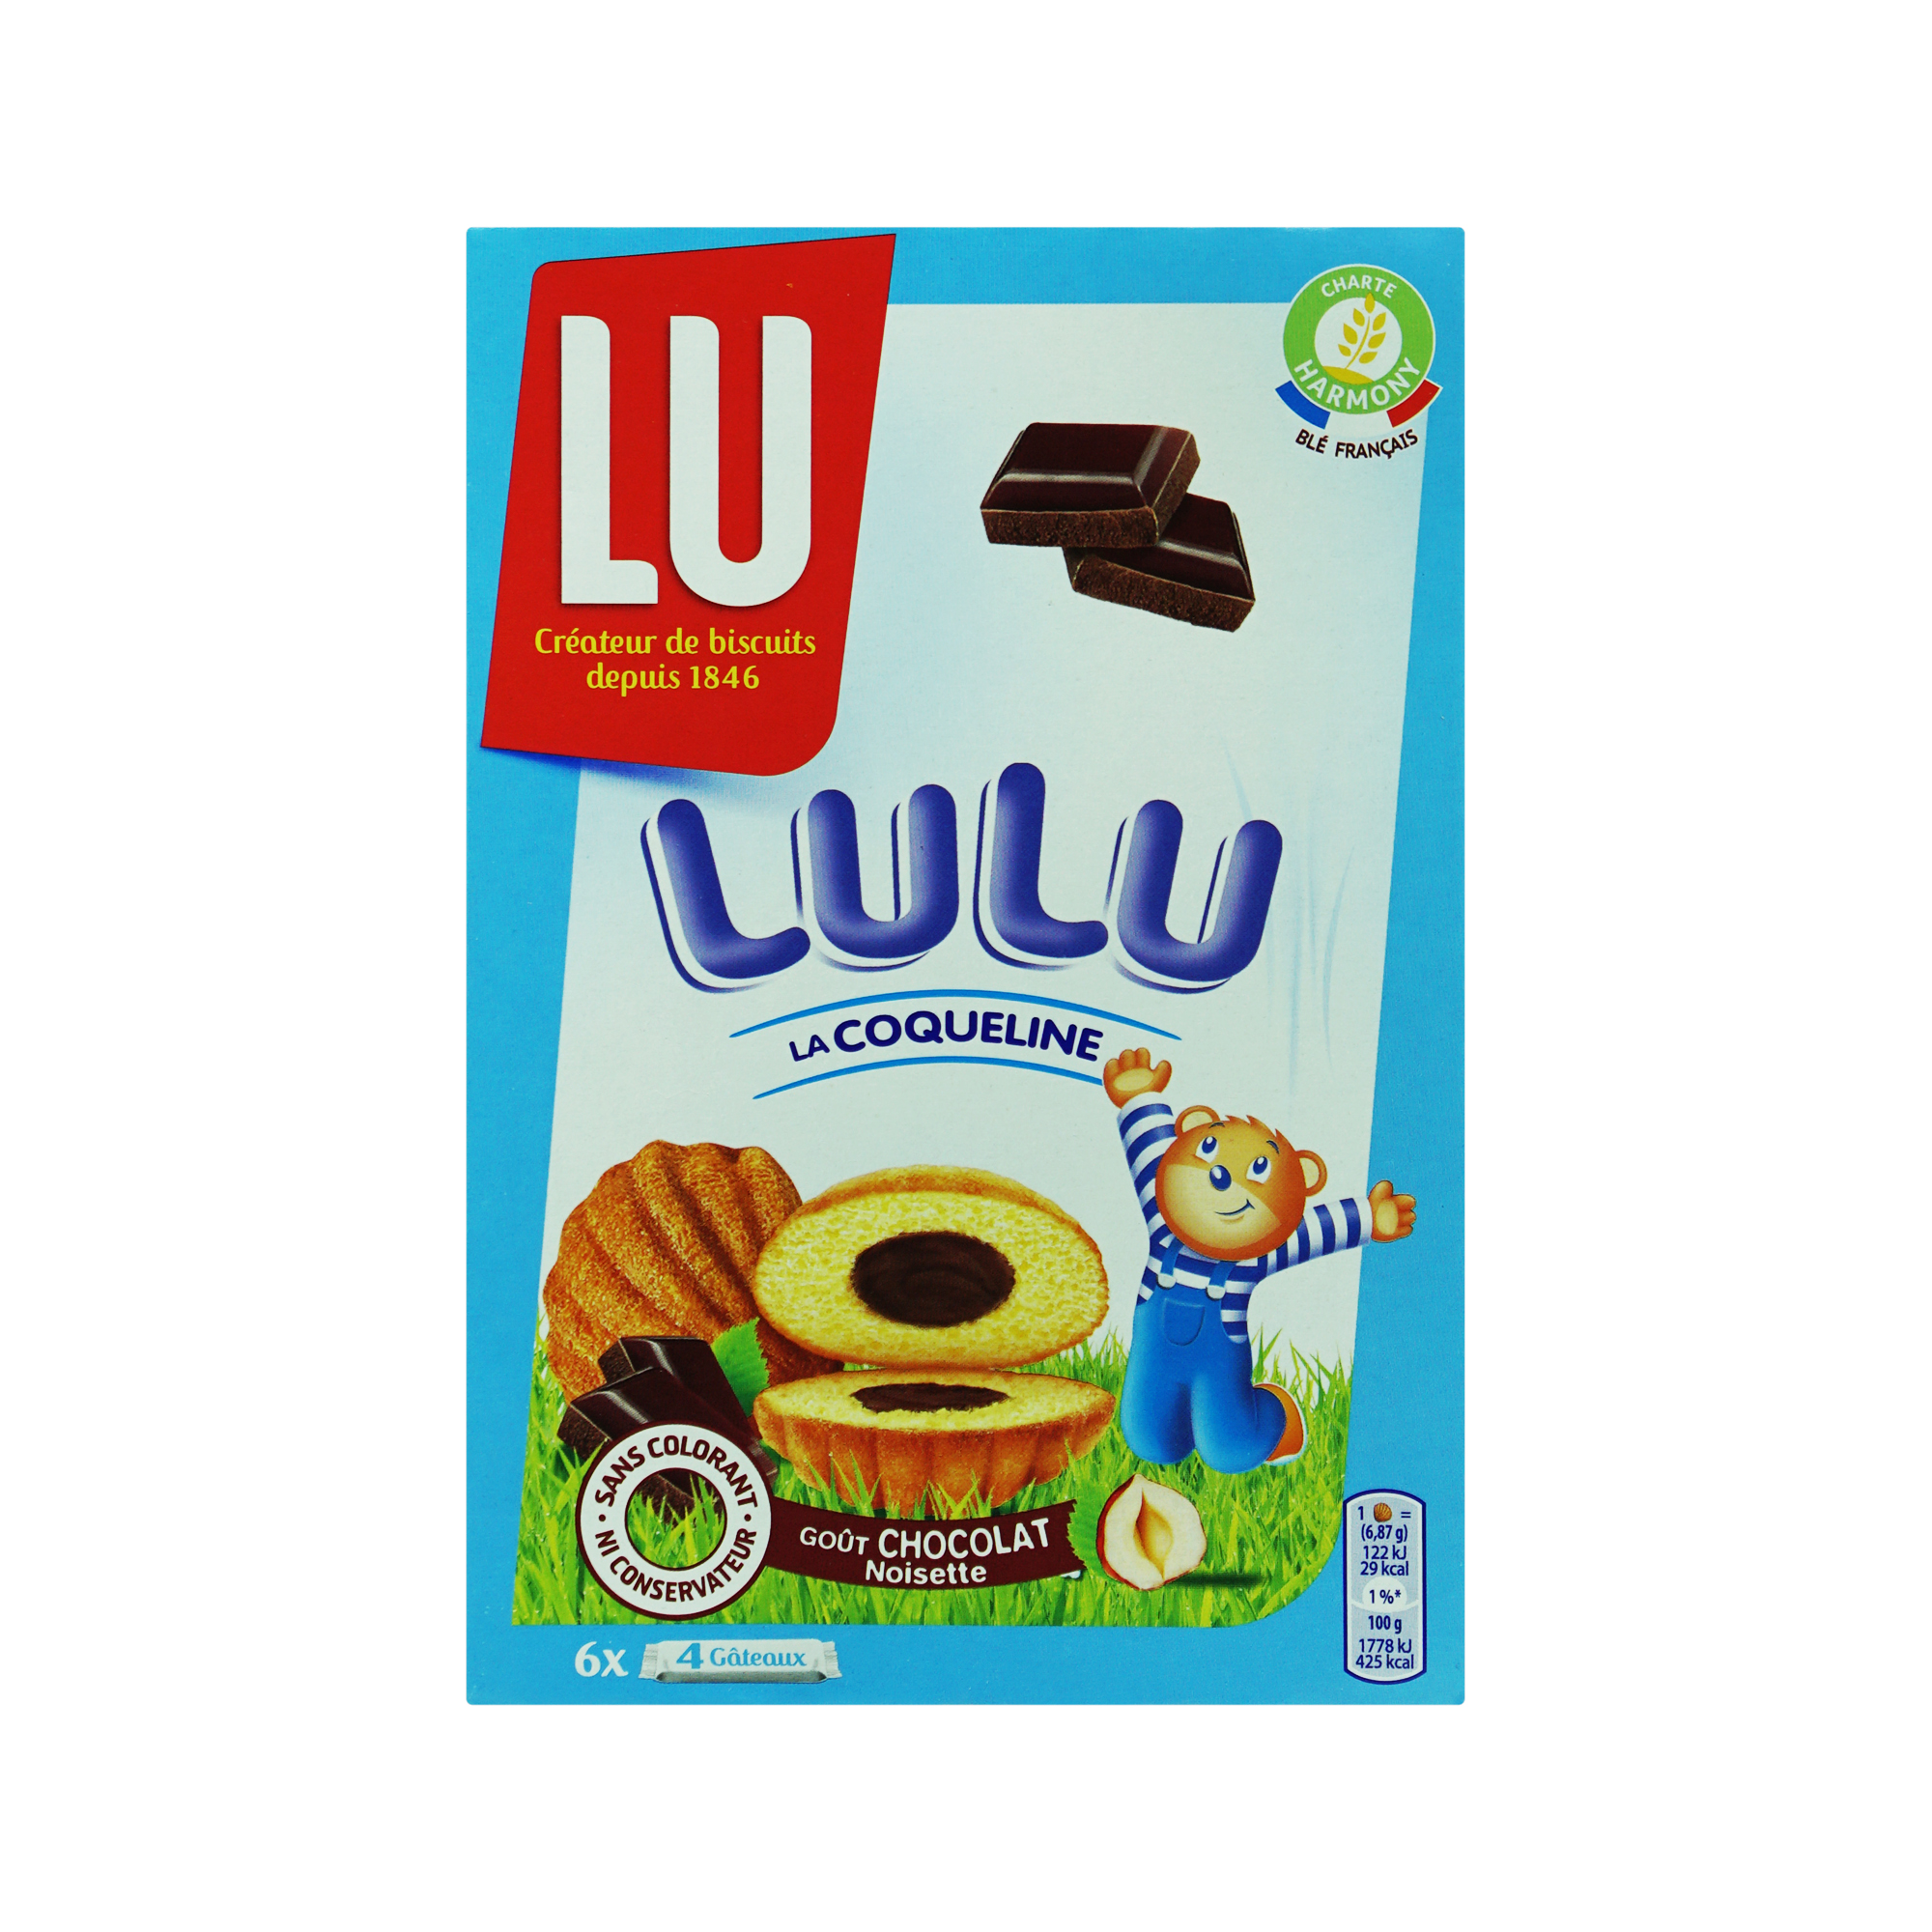 LU Lulu La Coqueline Hazelnut Chocolate Cakes (165g)